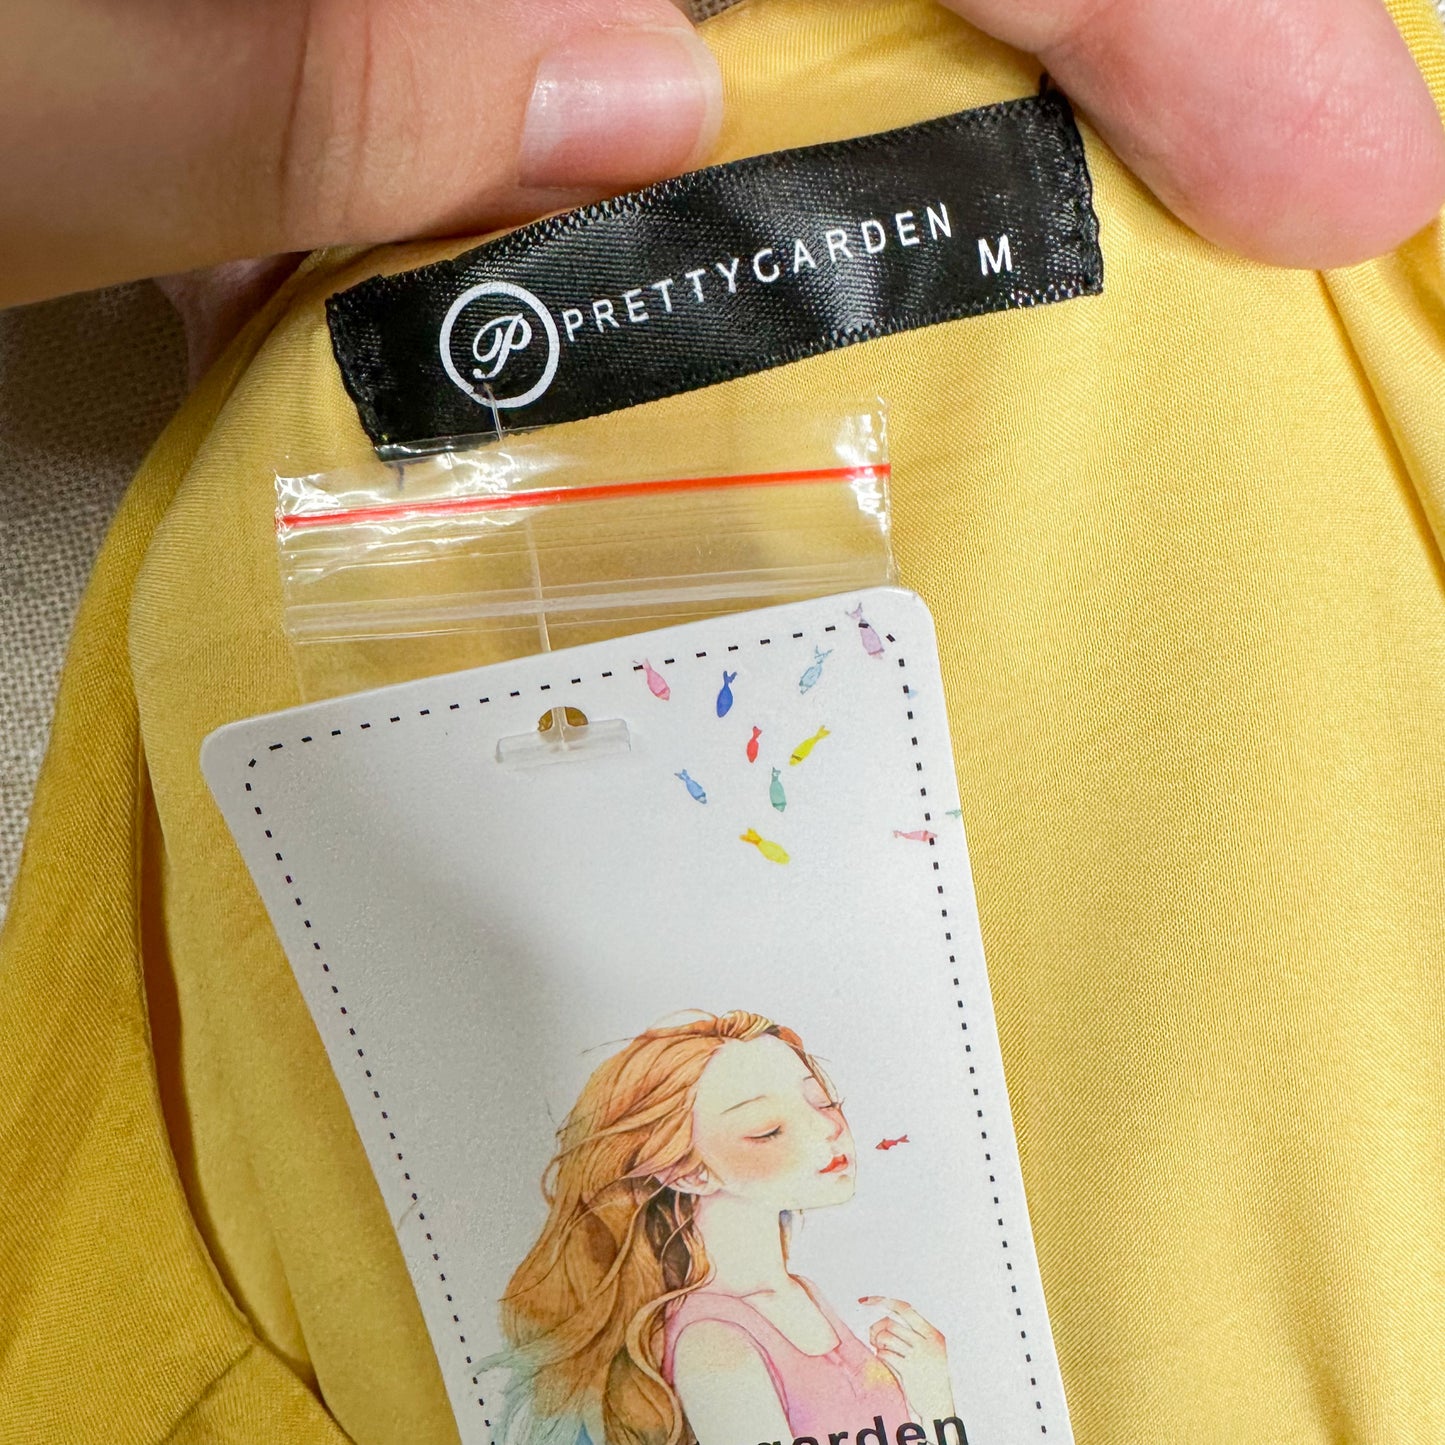 Prettygarden New Yellow Puff Sleeve Mini Dress Size Medium